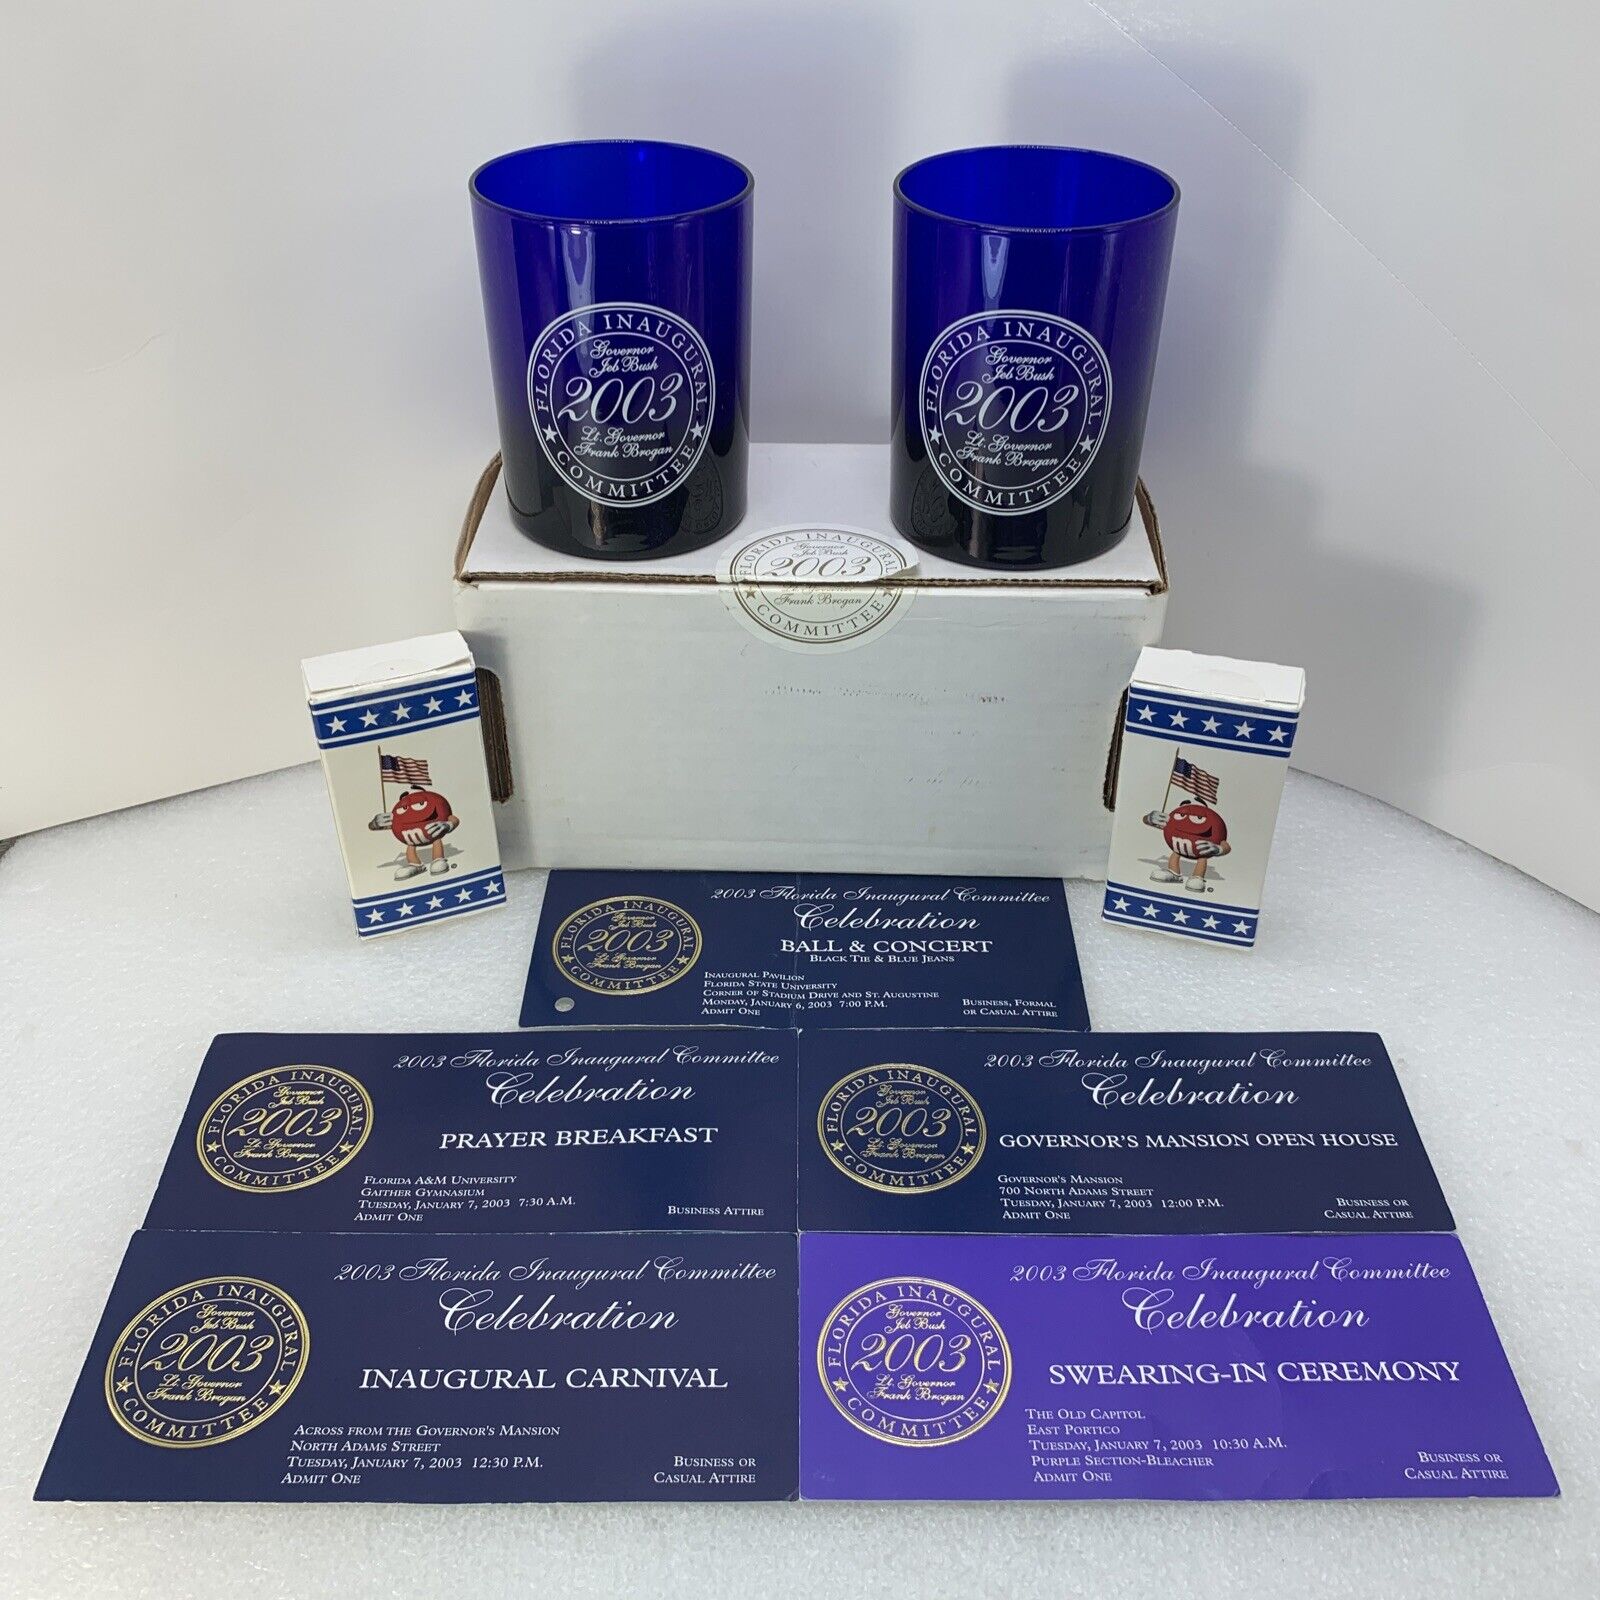 2003 Florida Inaugural Committee Jeb Bush Blue Glass Cups Invitations Gift Box